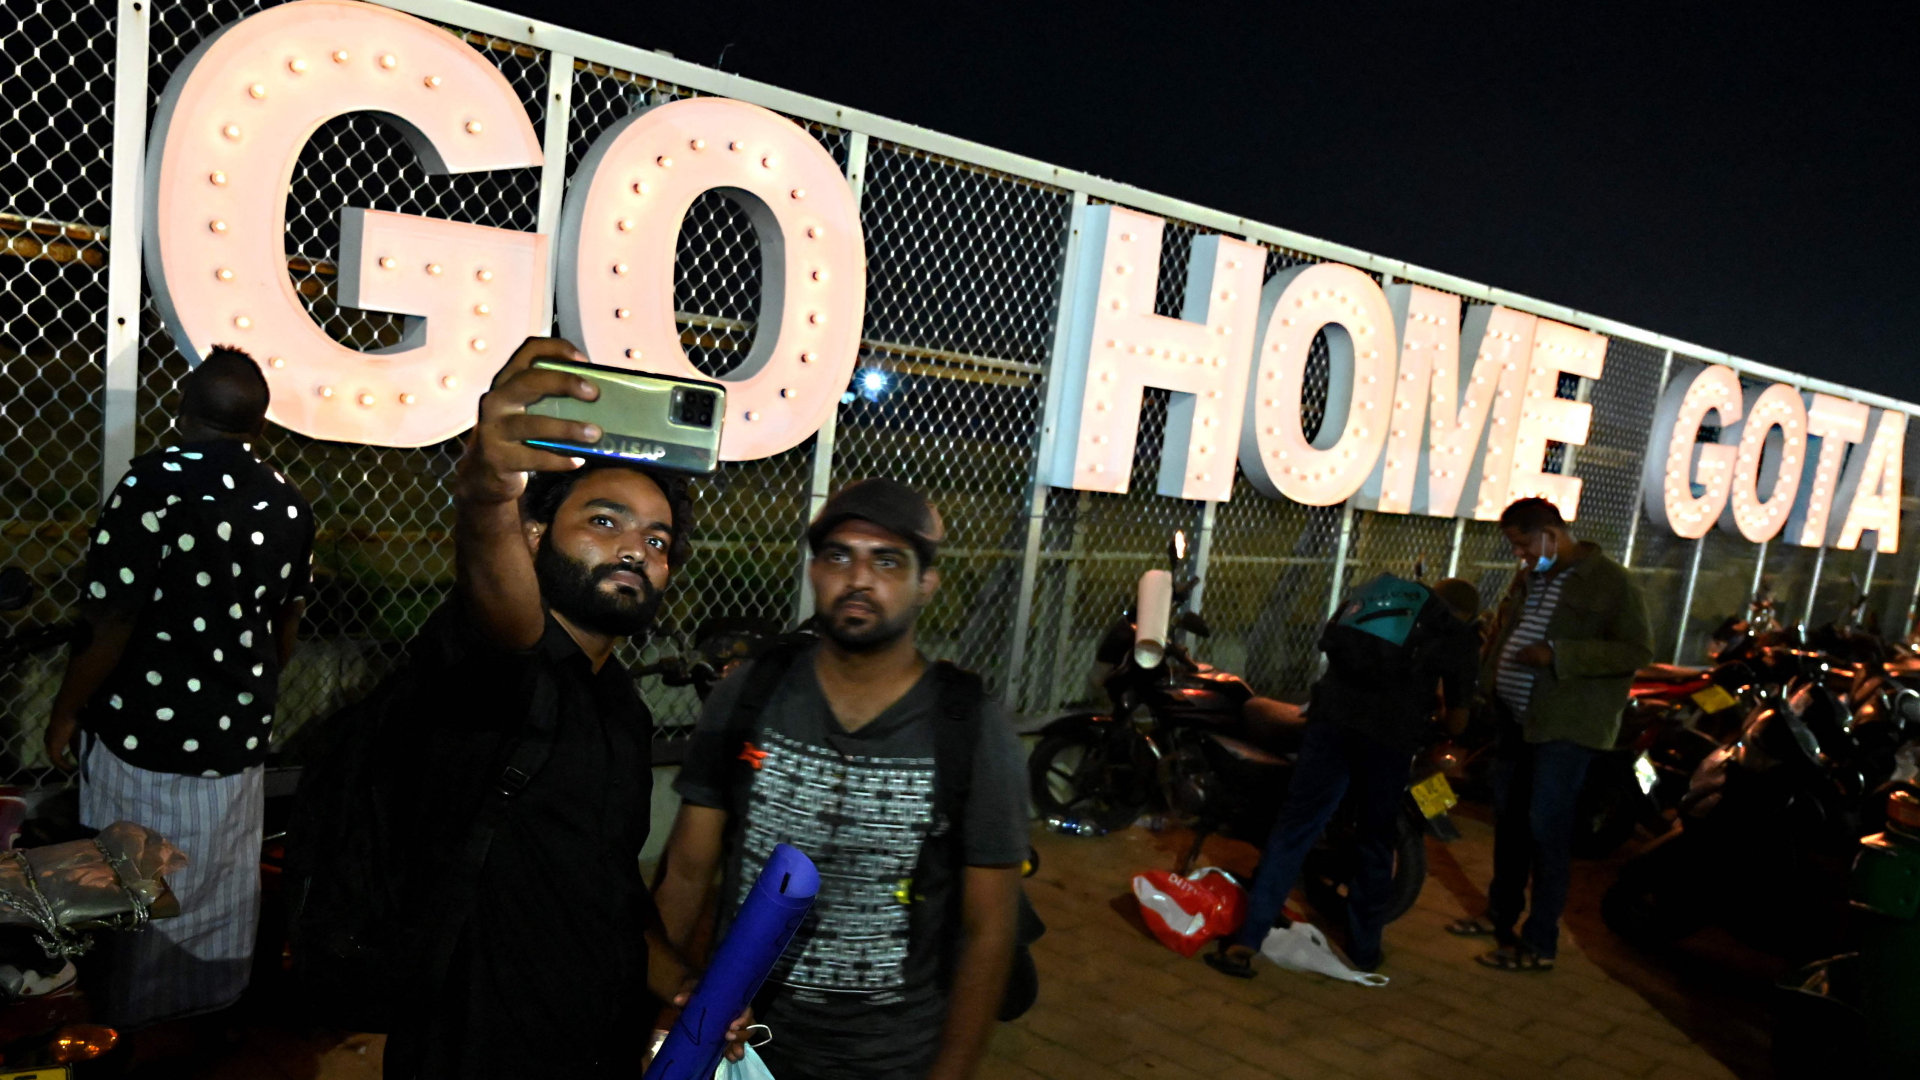 Demonstranten in Colombo (Sri Lanka) fotografieren sich vor einem Schriftzug "Go home Gota" | AFP